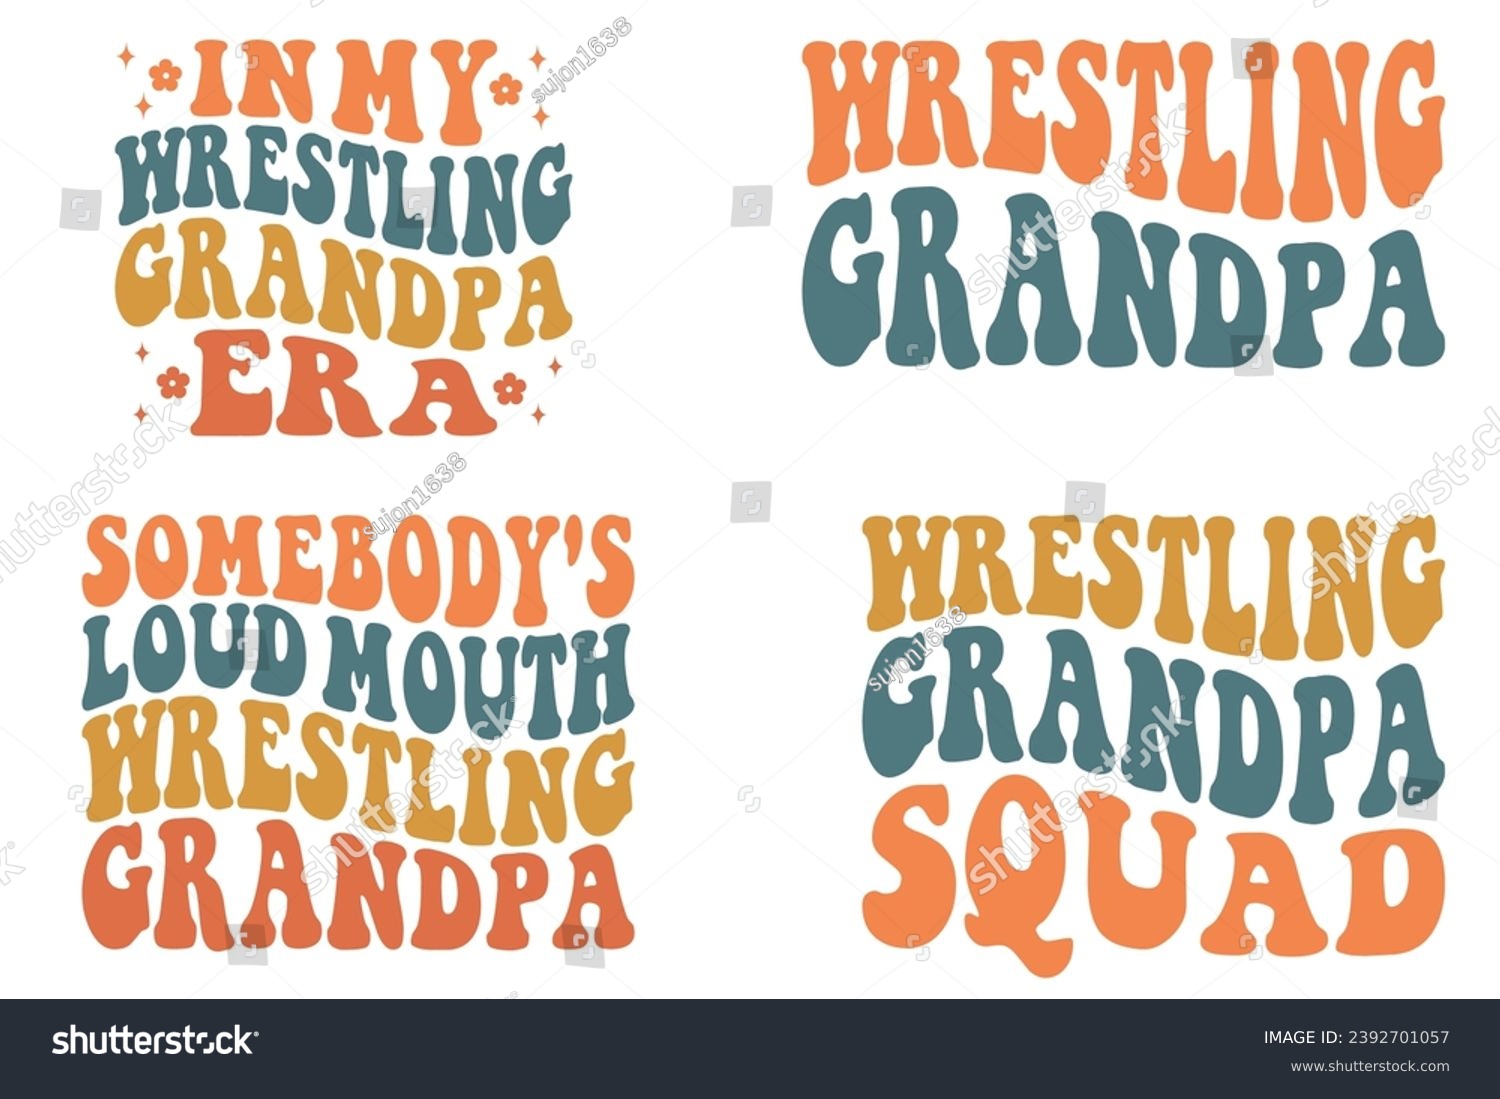 SVG of : In My Wrestling grandpa Era, Wrestling grandpa, Somebody's Loud Mouth Wrestling grandpa, Wrestling grandpa Squad retro wavy T-shirt designs svg